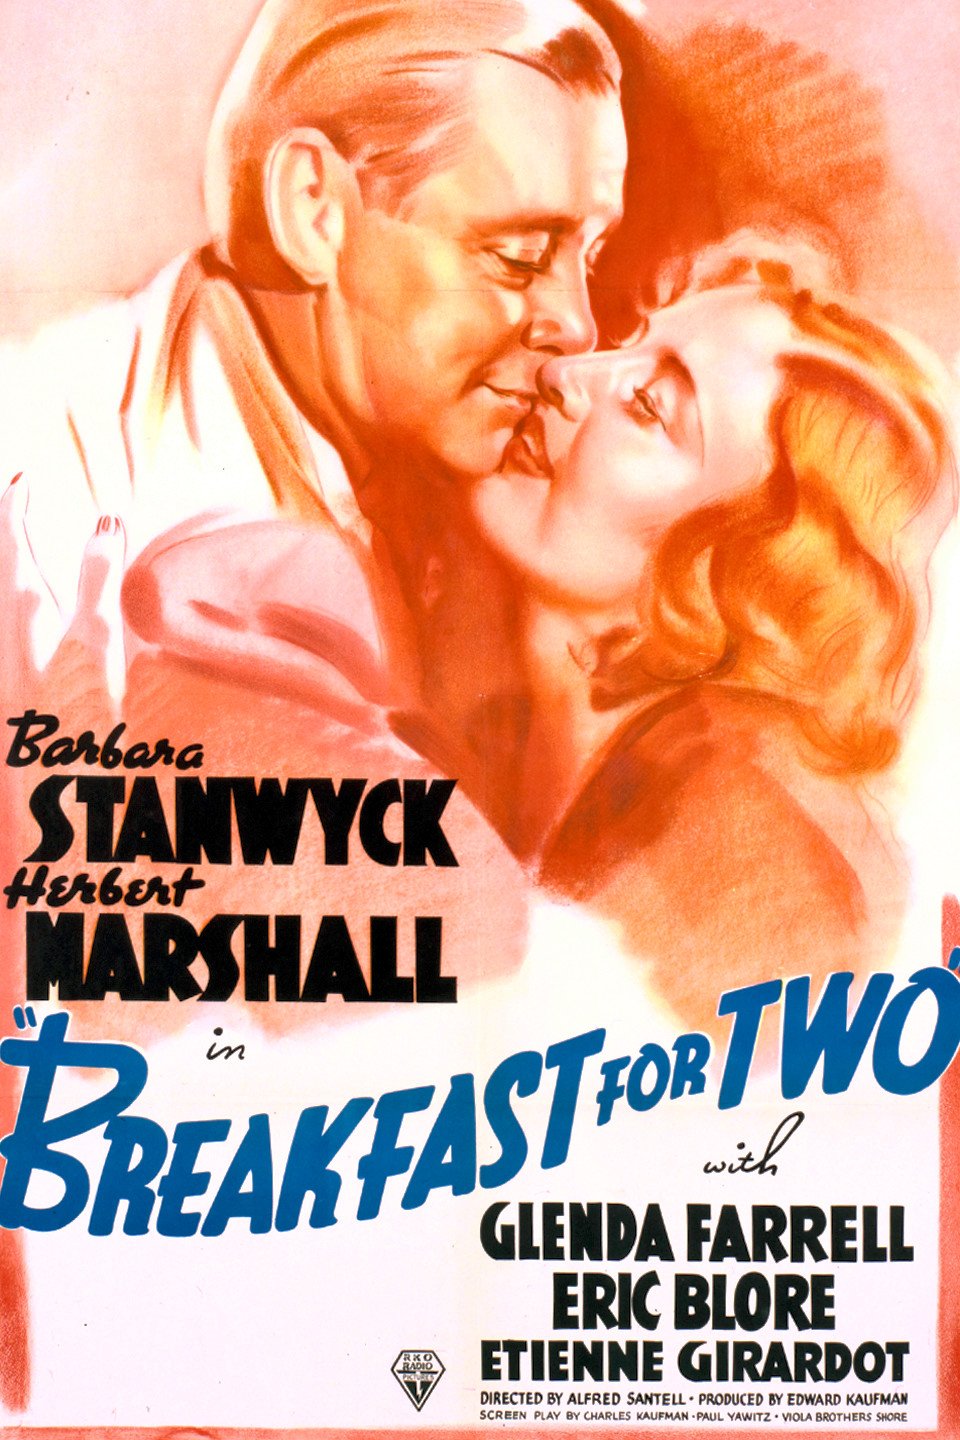 L'affiche du film Breakfast for Two